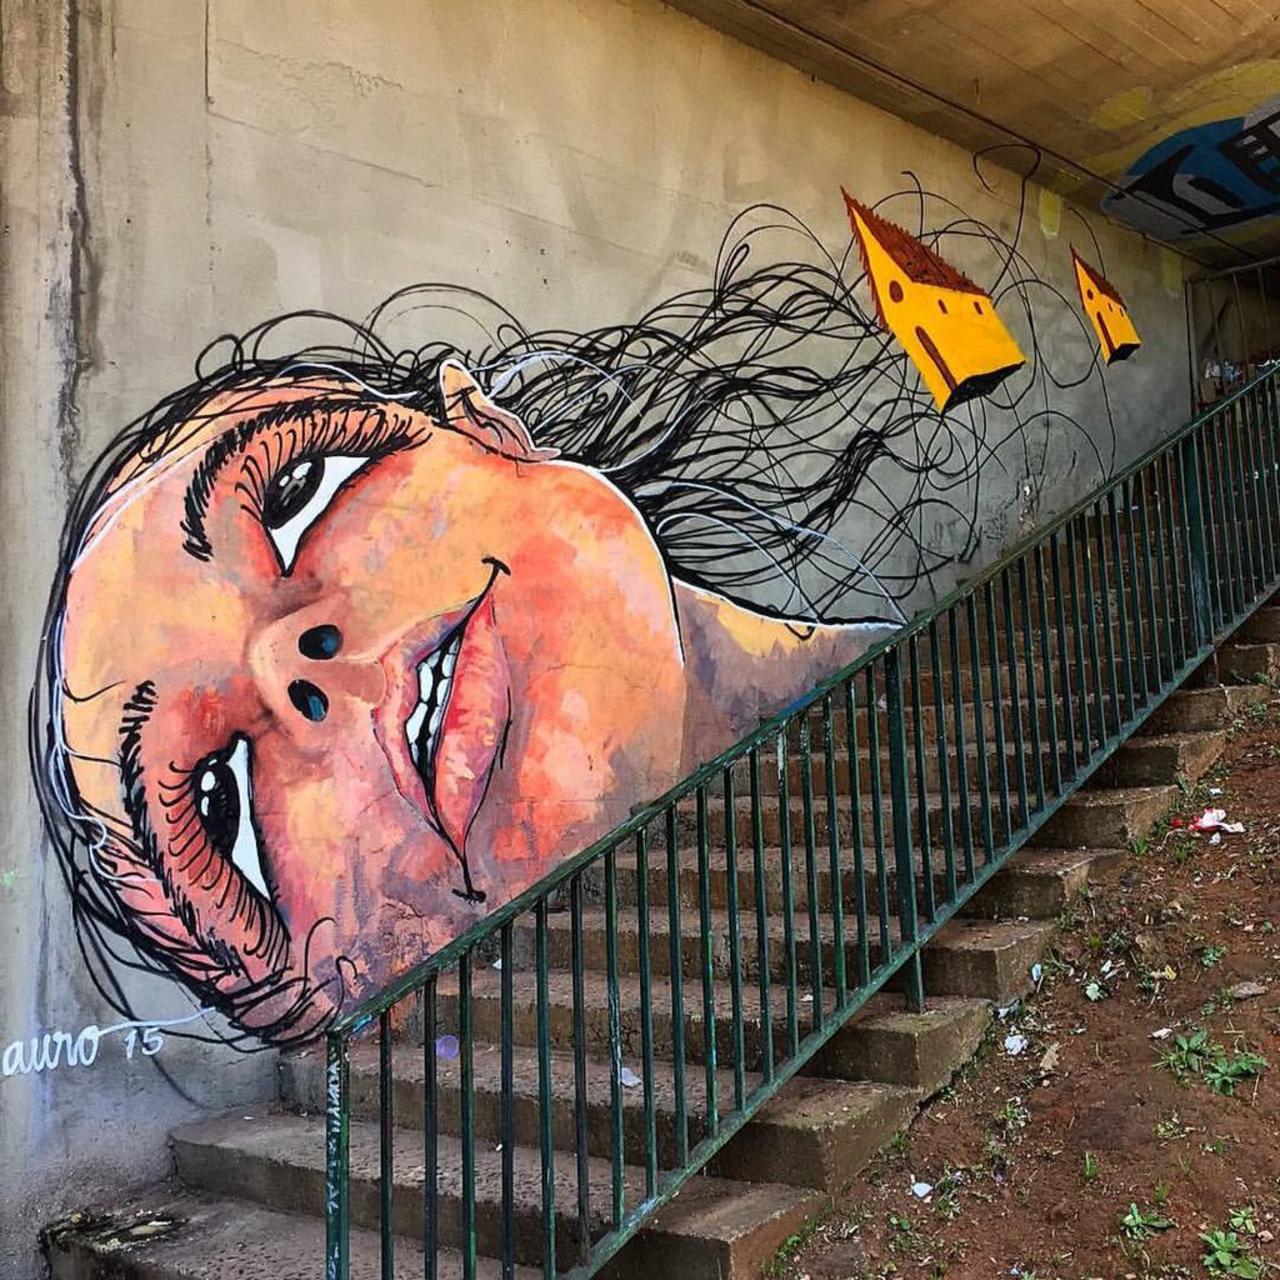 Street Art by Reveracidade in São Paulo 

#art #graffiti #mural #streetart http://t.co/rwptKrRXCp